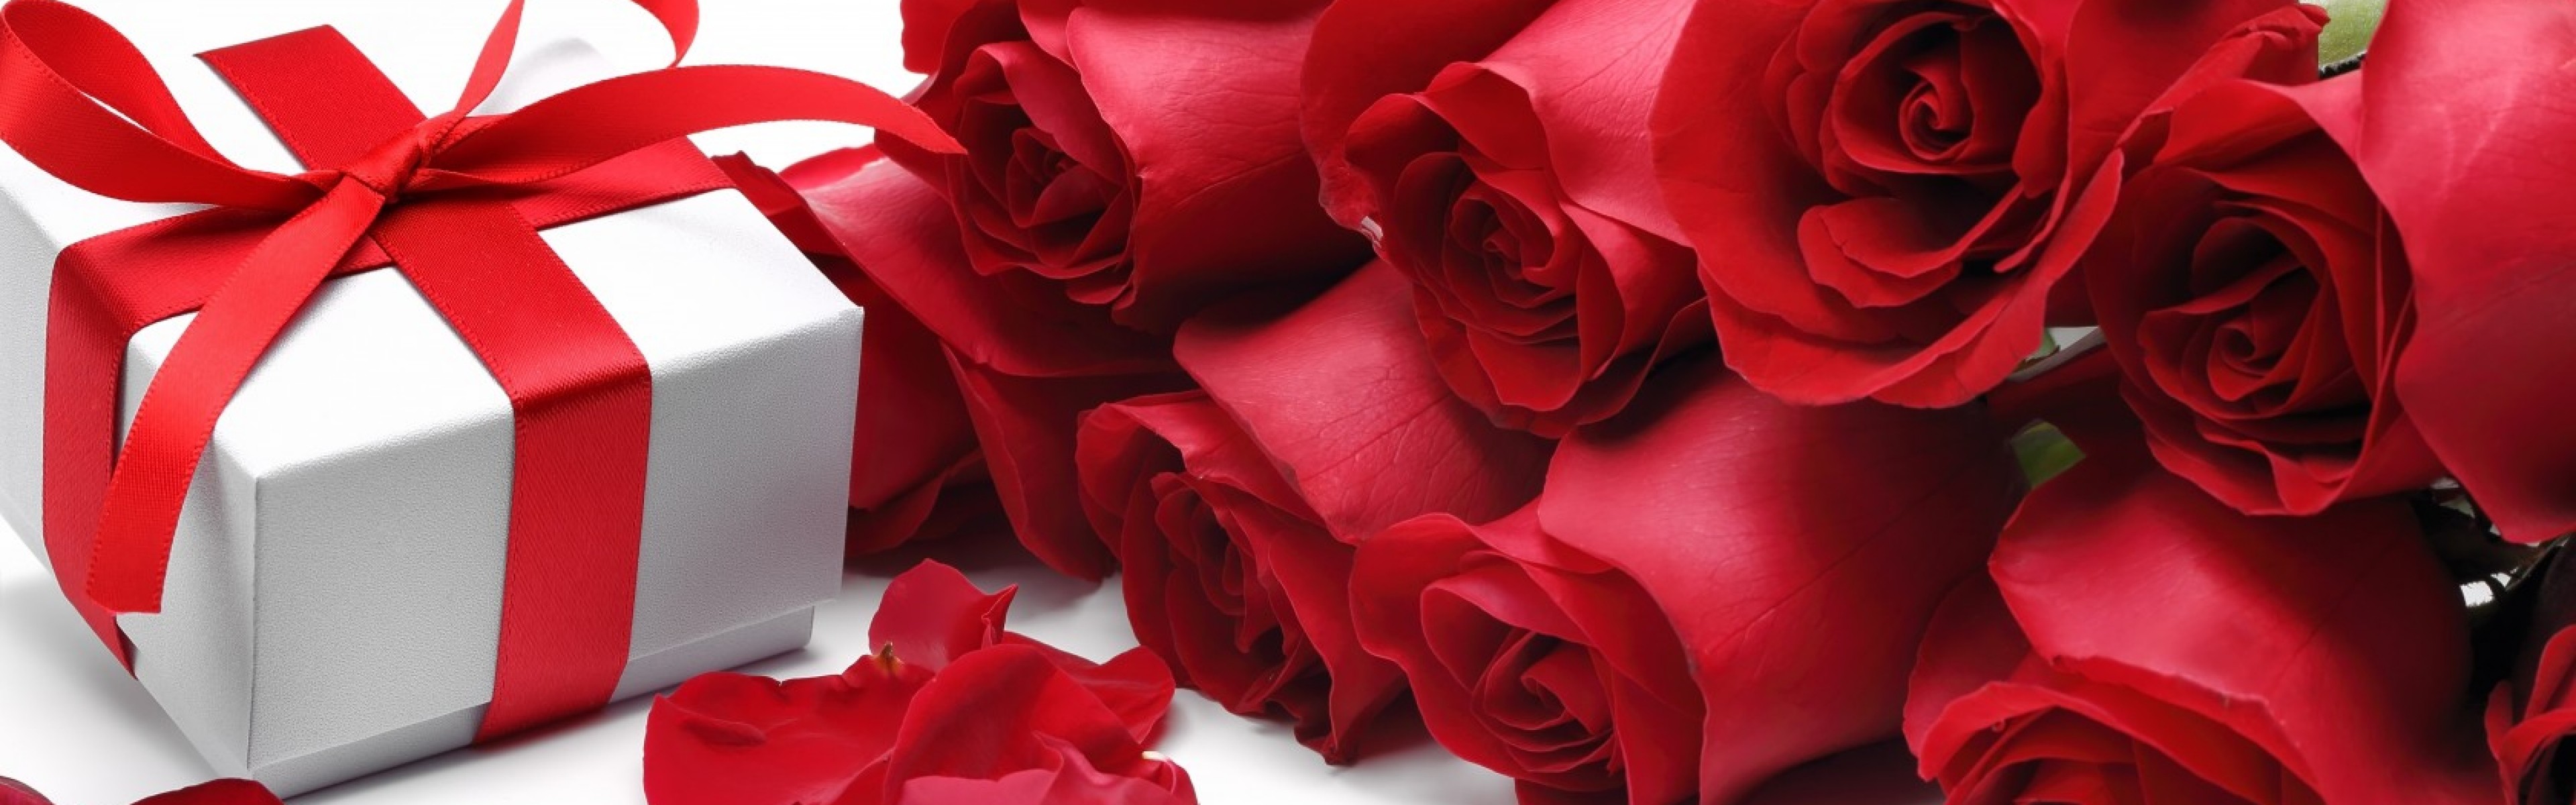 3840x1200  Wallpaper flowers, roses, red roses, gift